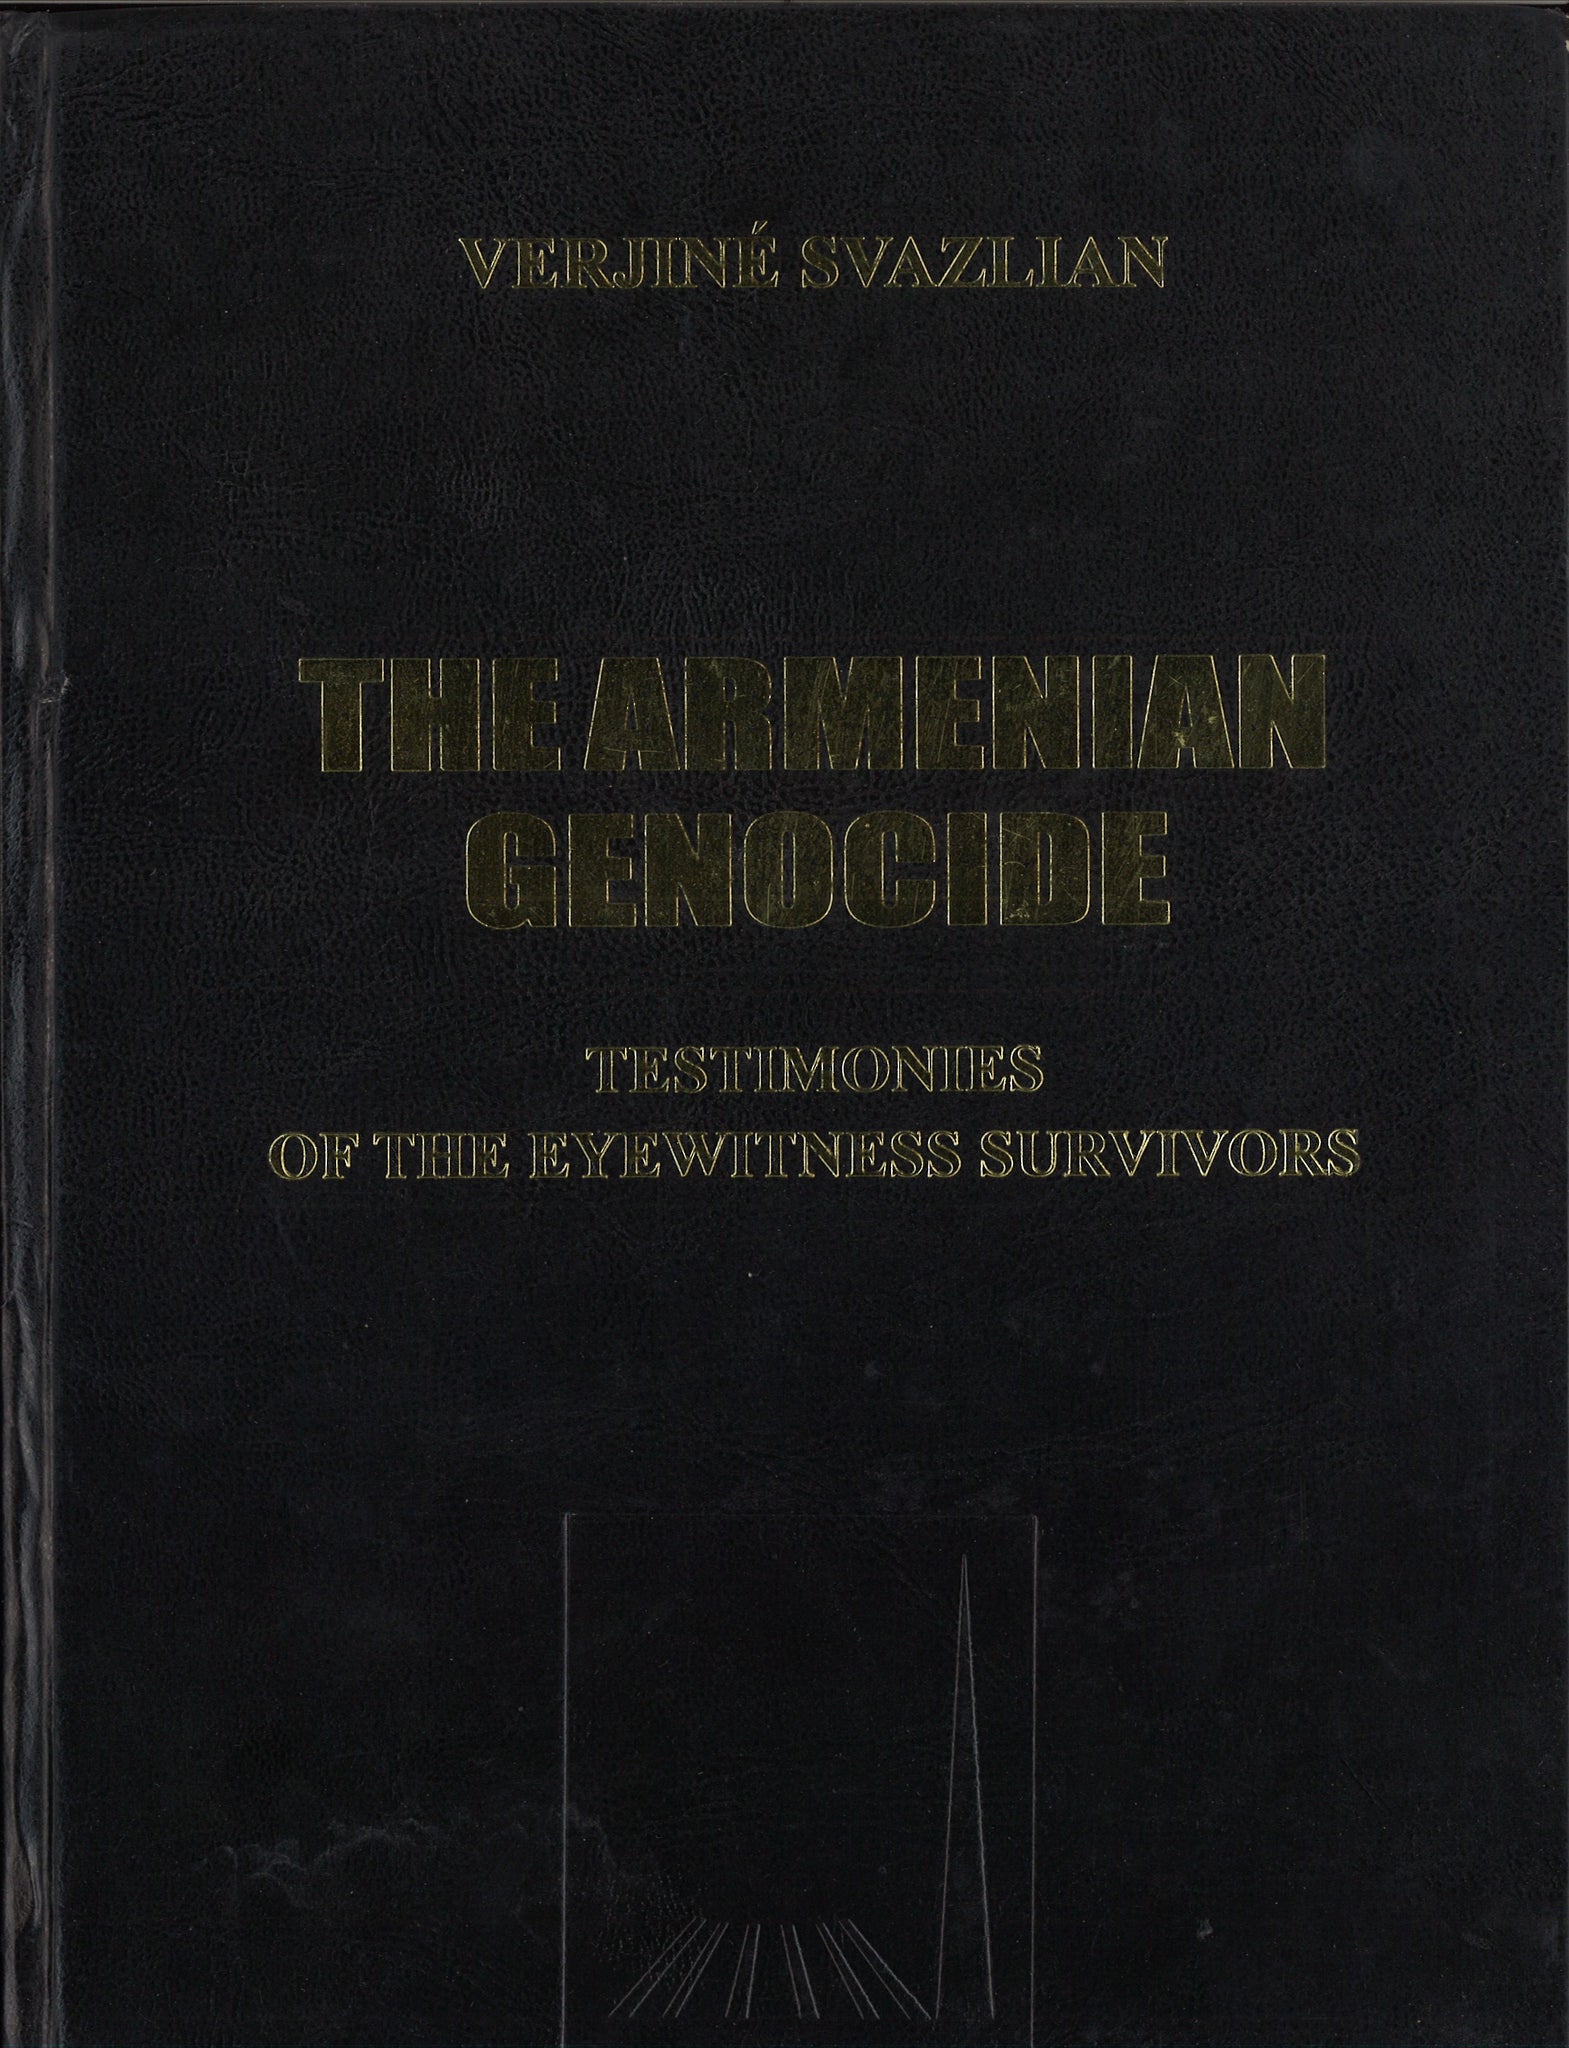 ARMENIAN GENOCIDE, THE: TESTIMONIES OF THE EYEWITNESS SURVIVORS